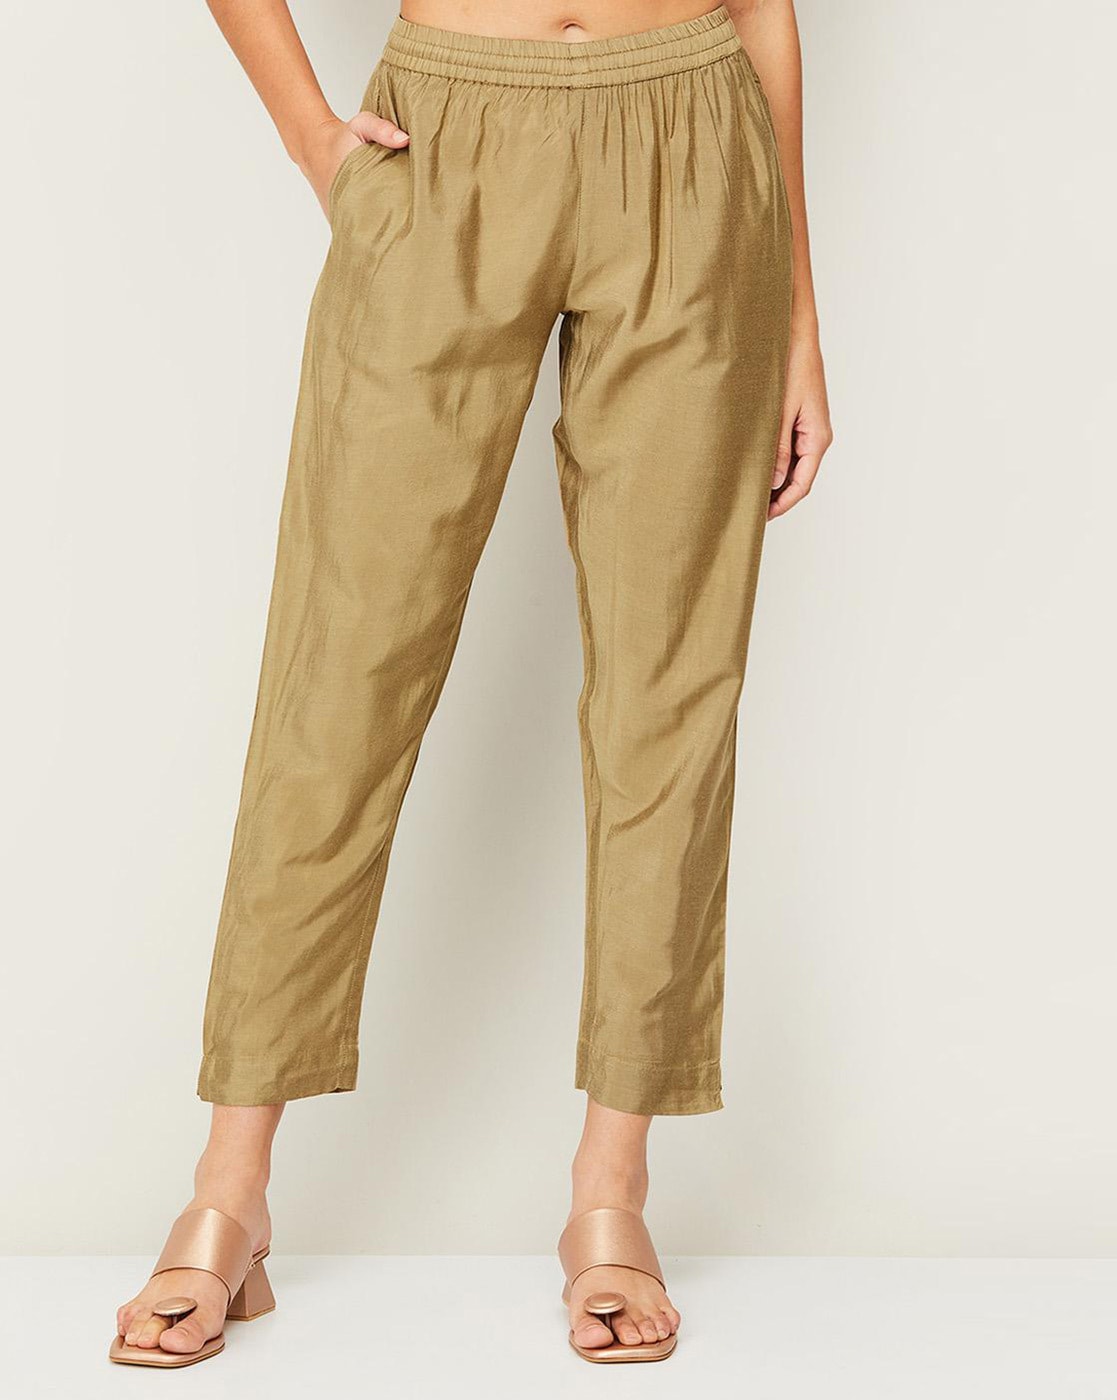 Xysaqa Resort Wear for Women 2023, Women's Casual High Waist Wide Leg Comfy  Pants Elastic Waisted Loose Fit Trousers - Walmart.com